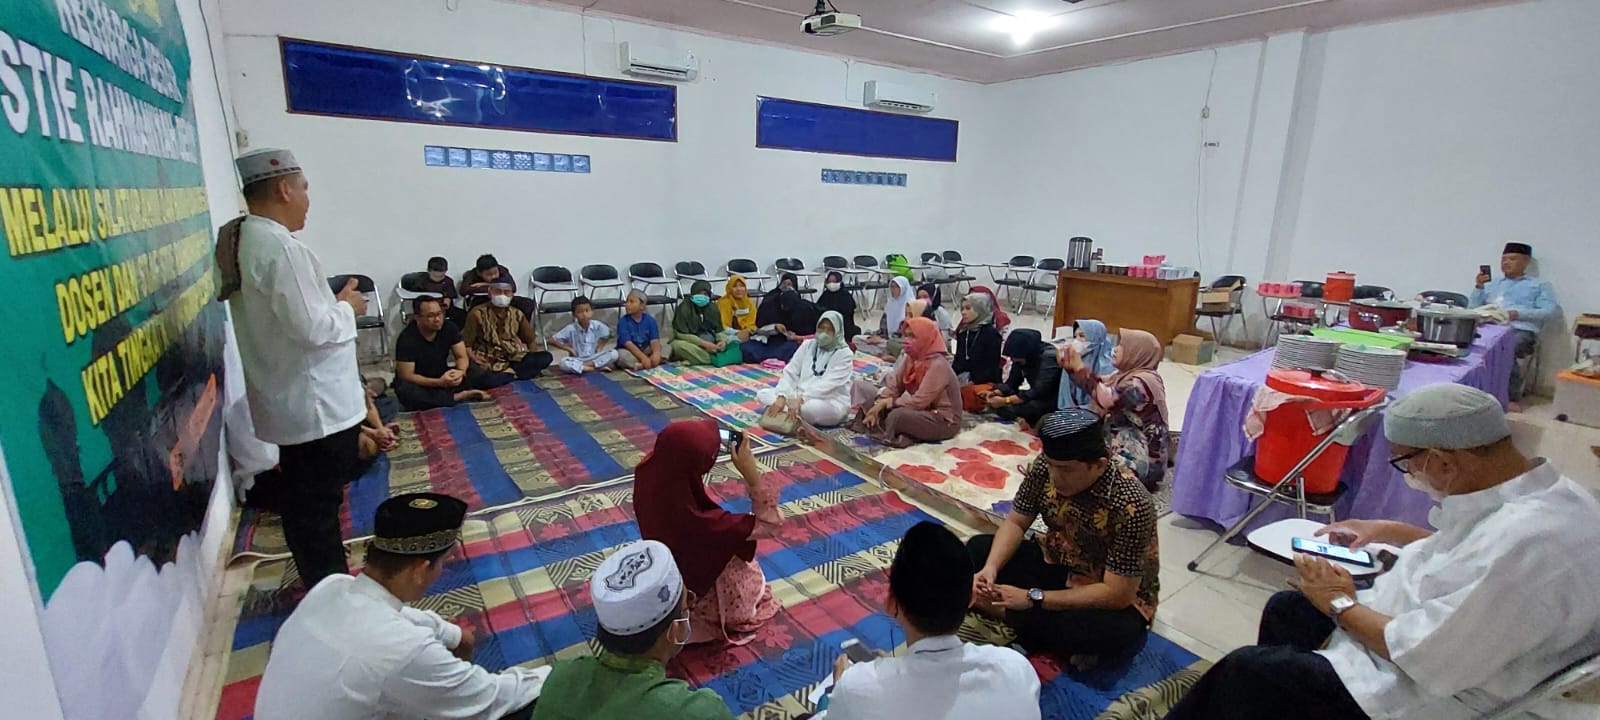 Alhamdulillah Melalui Silaturahmi dan Buka Puasa bersama kita tingkatkan Ukhuwah Islamiyah